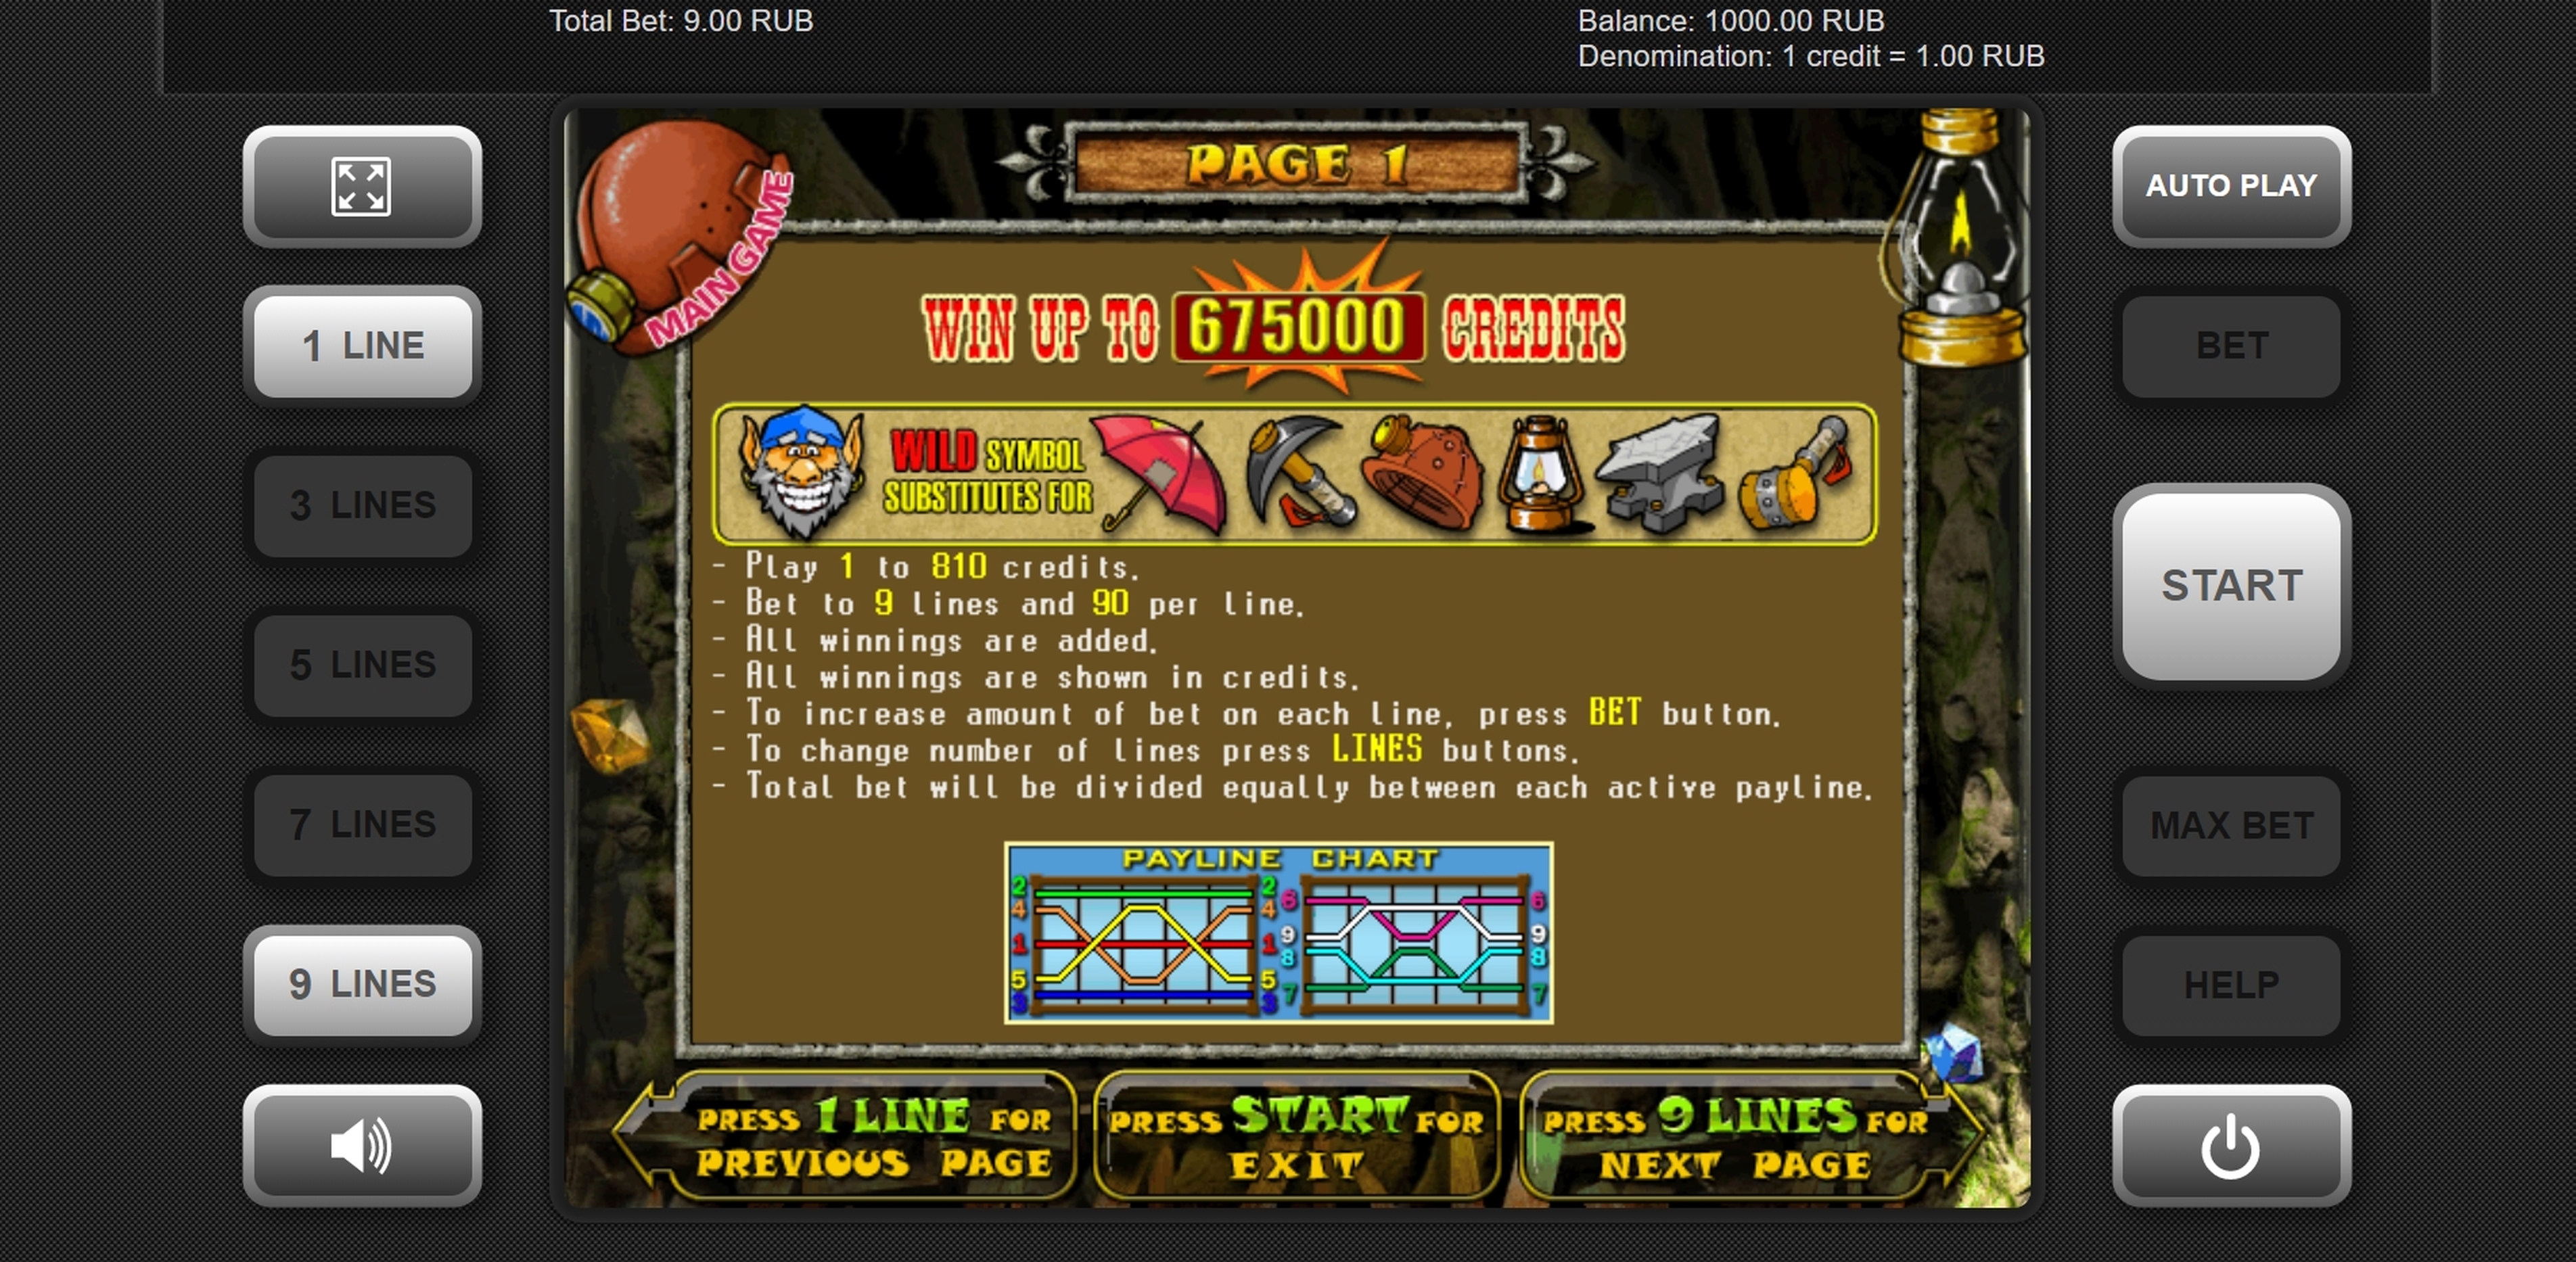 Info of Gnome Slot Game by Igrosoft